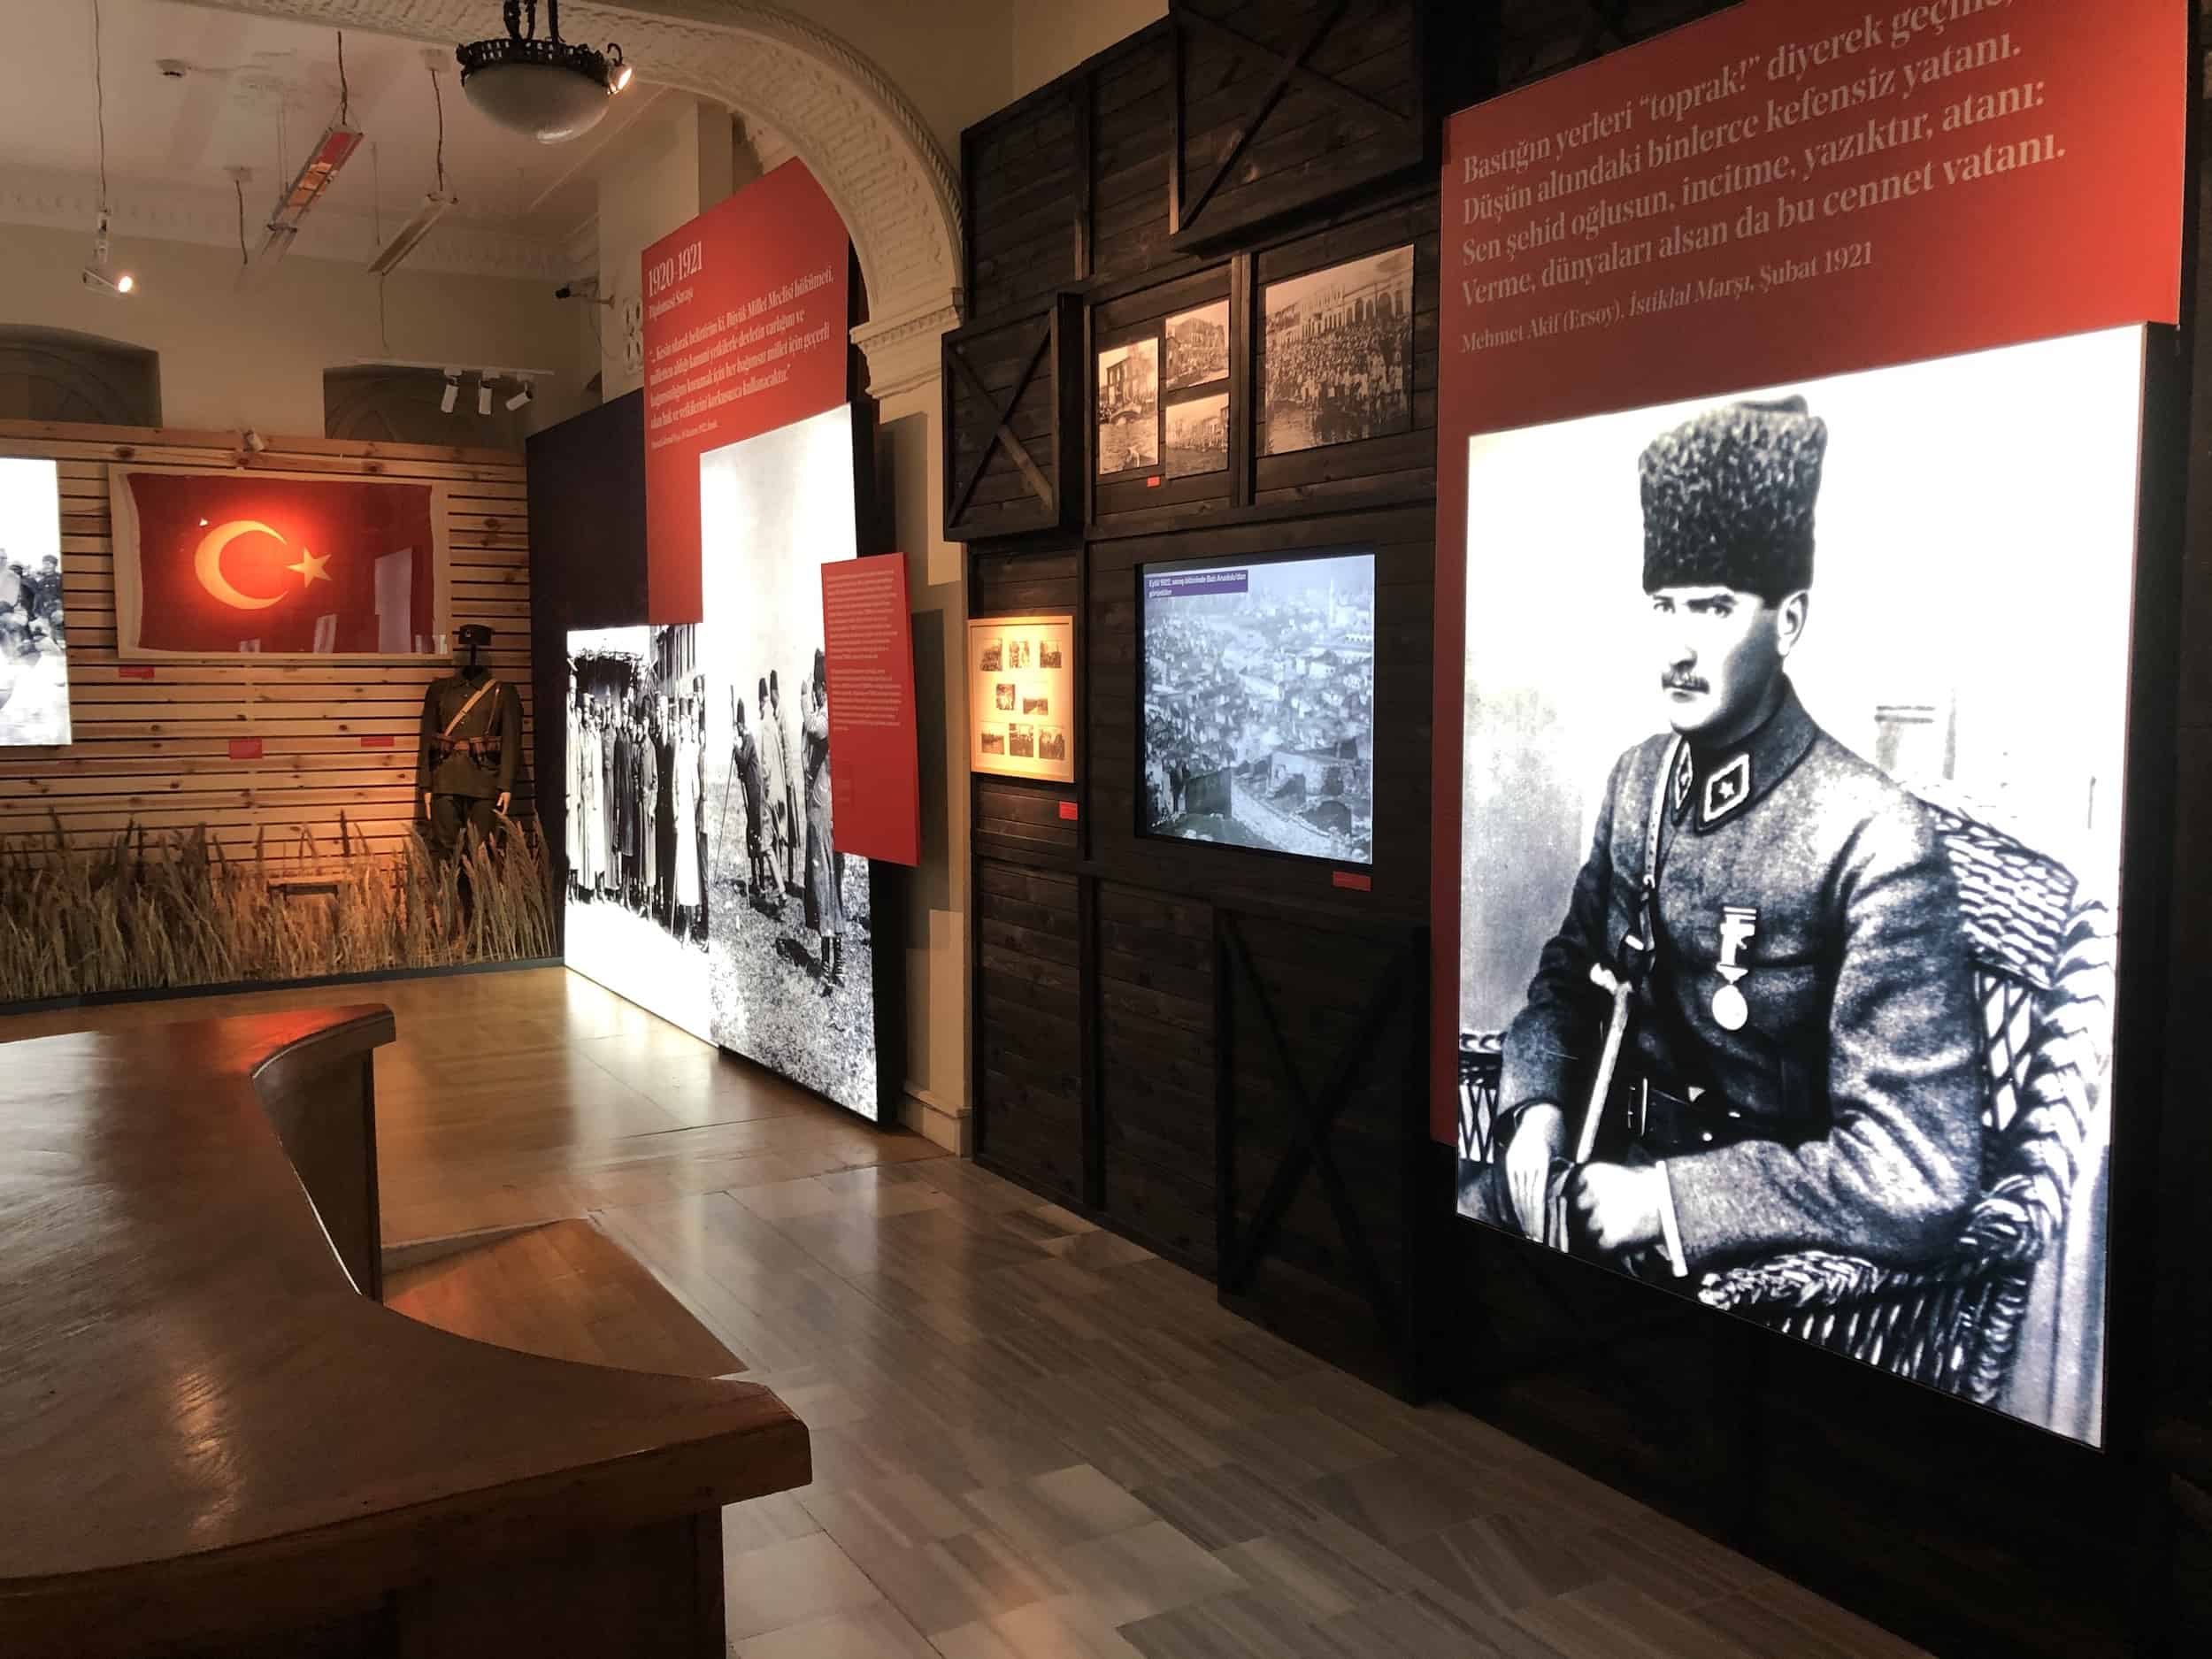 Turkish War of Independence exhibit at the İşbank Museum in Eminönü, Istanbul, Turkey